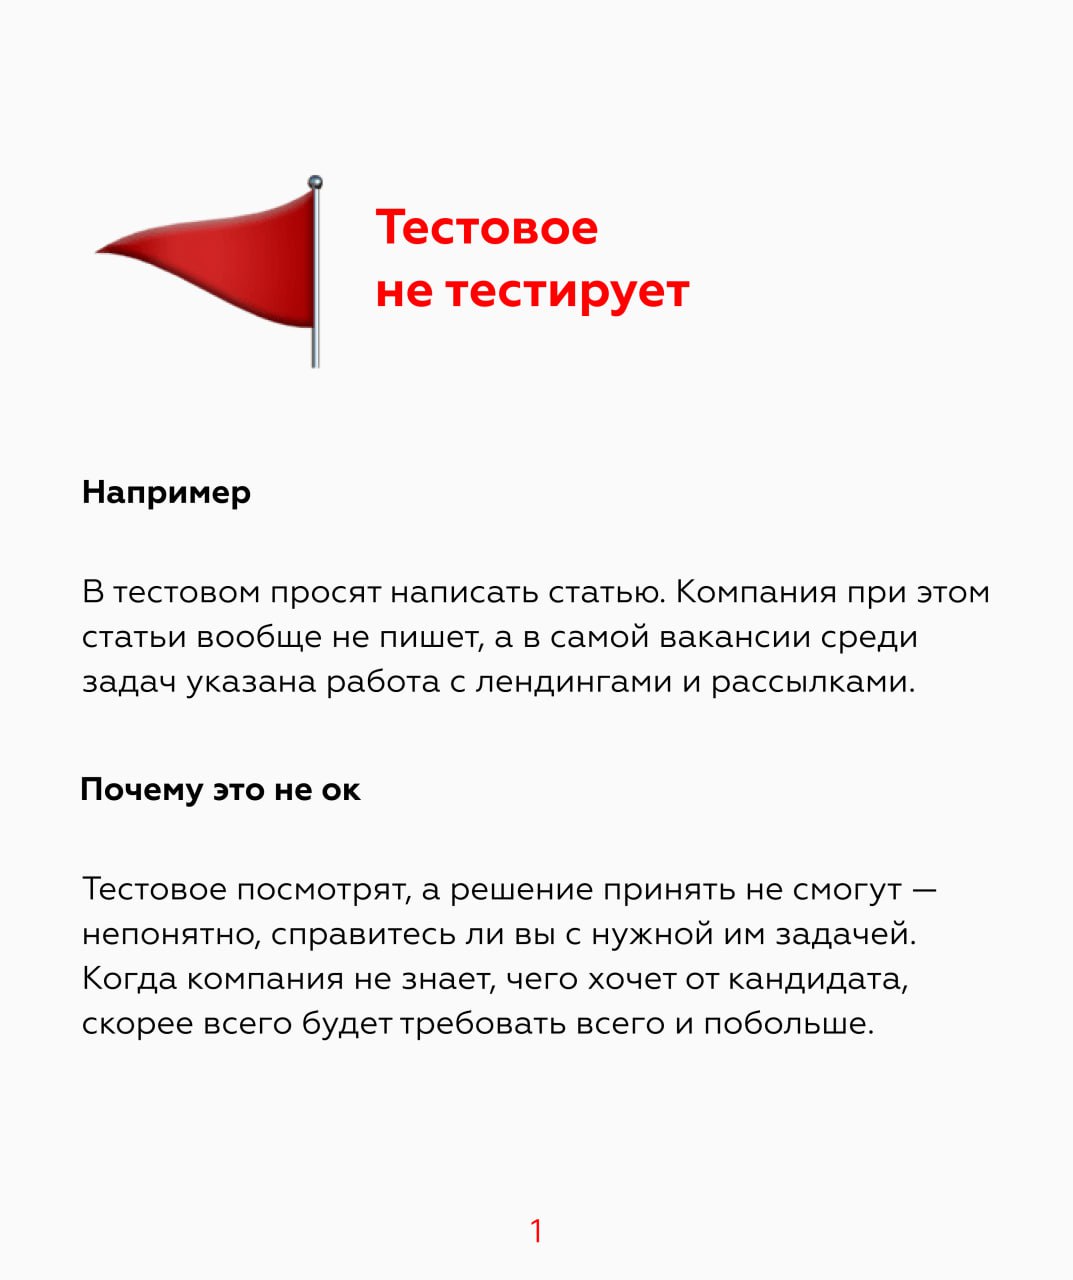 Как перевести текст в телеграмме на русский фото 82